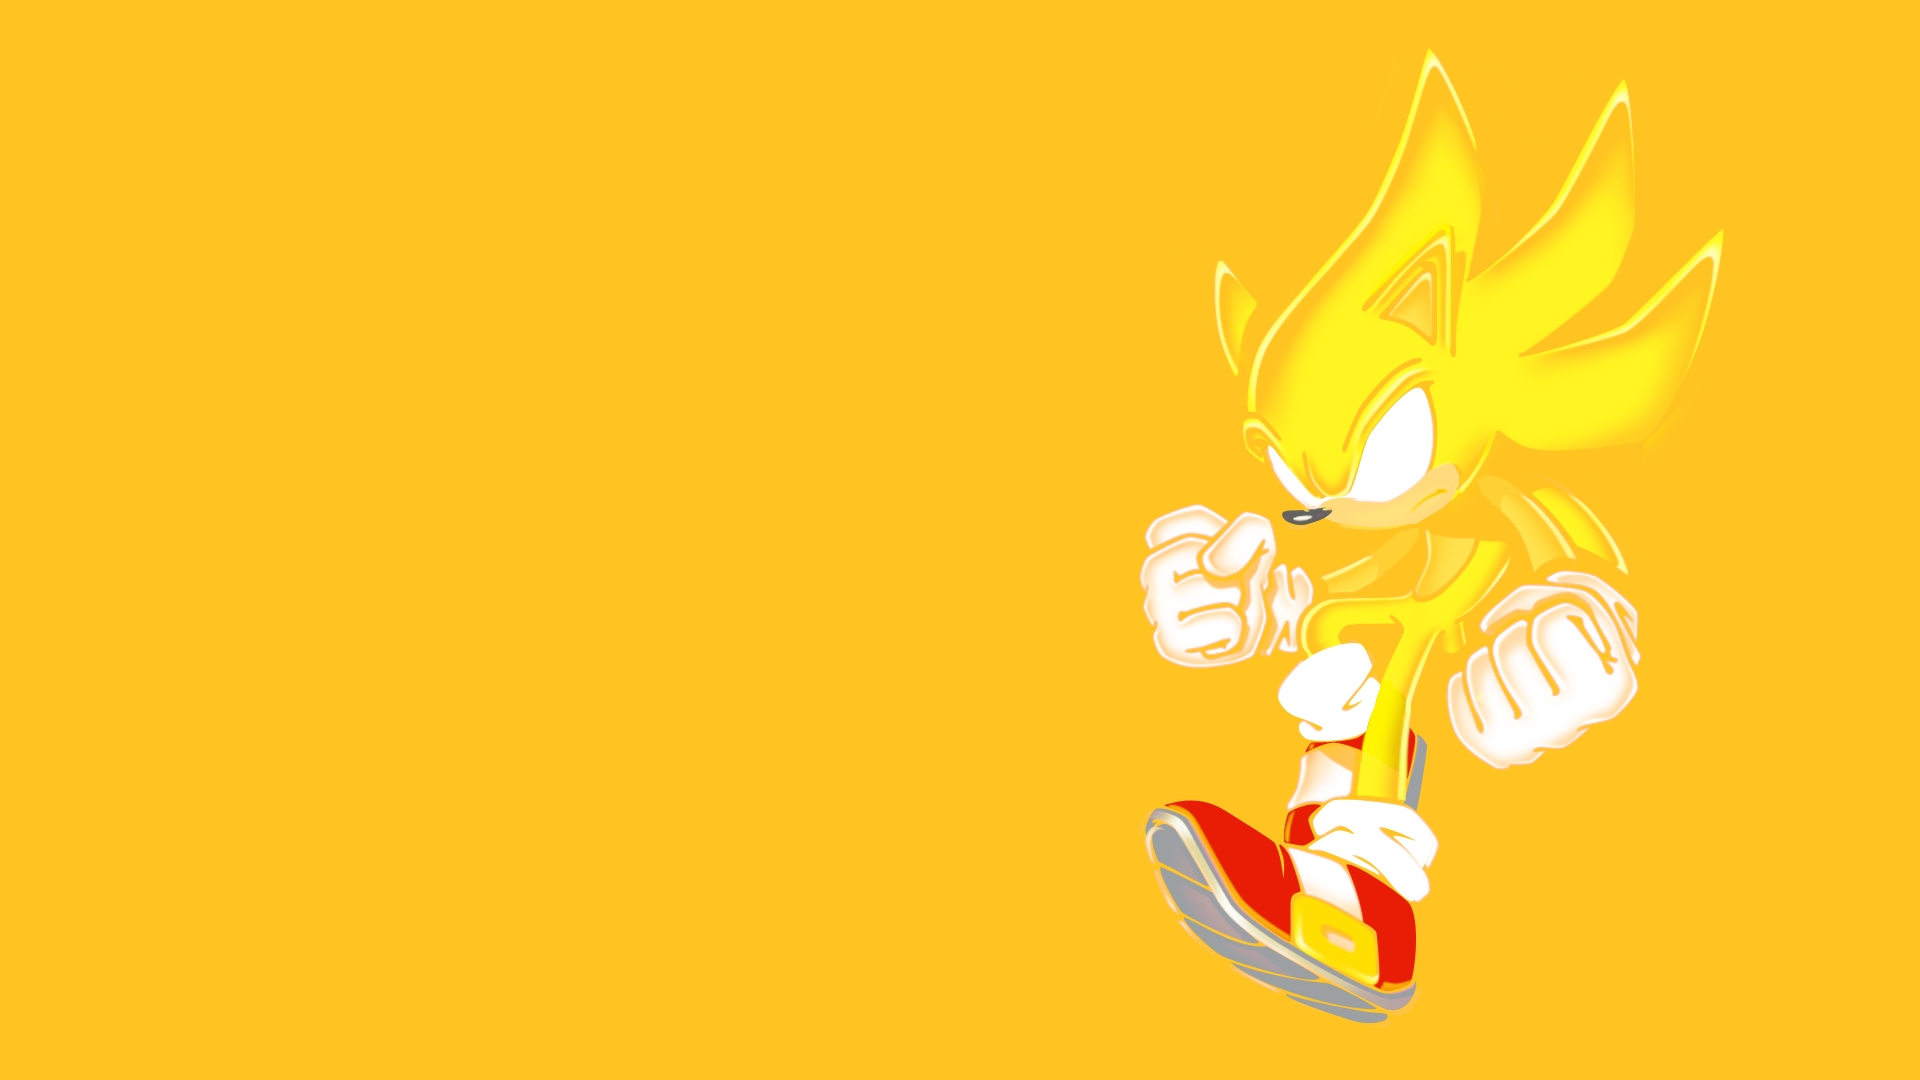 Sonic Sonic the Hedgehog Yellow wallpaper 1920x1080 58362 1920x1080